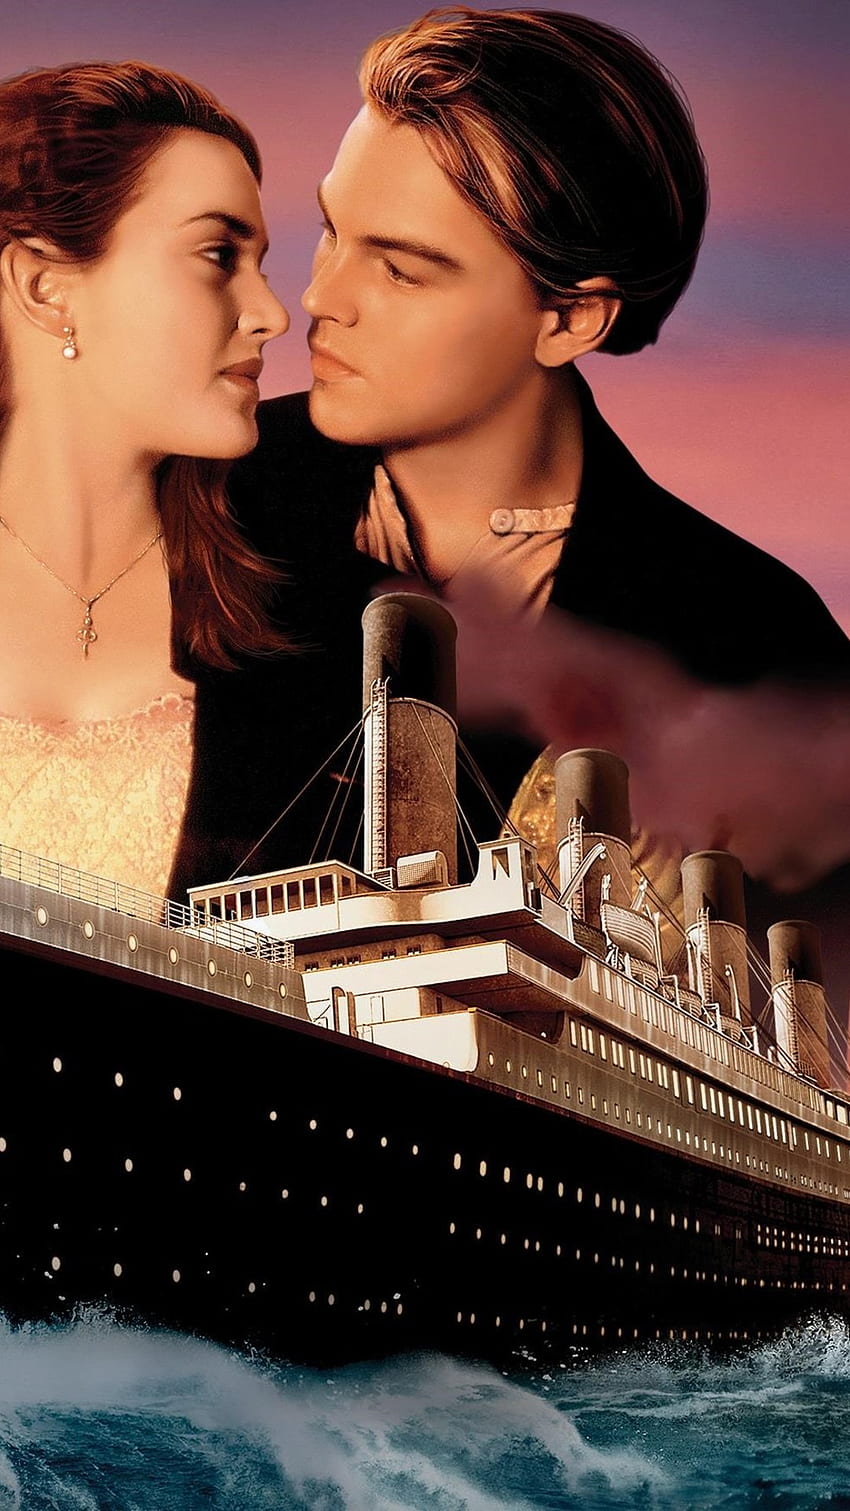 Kate Winslet - Titanic Drawing Rose Scene.3gp - video Dailymotion